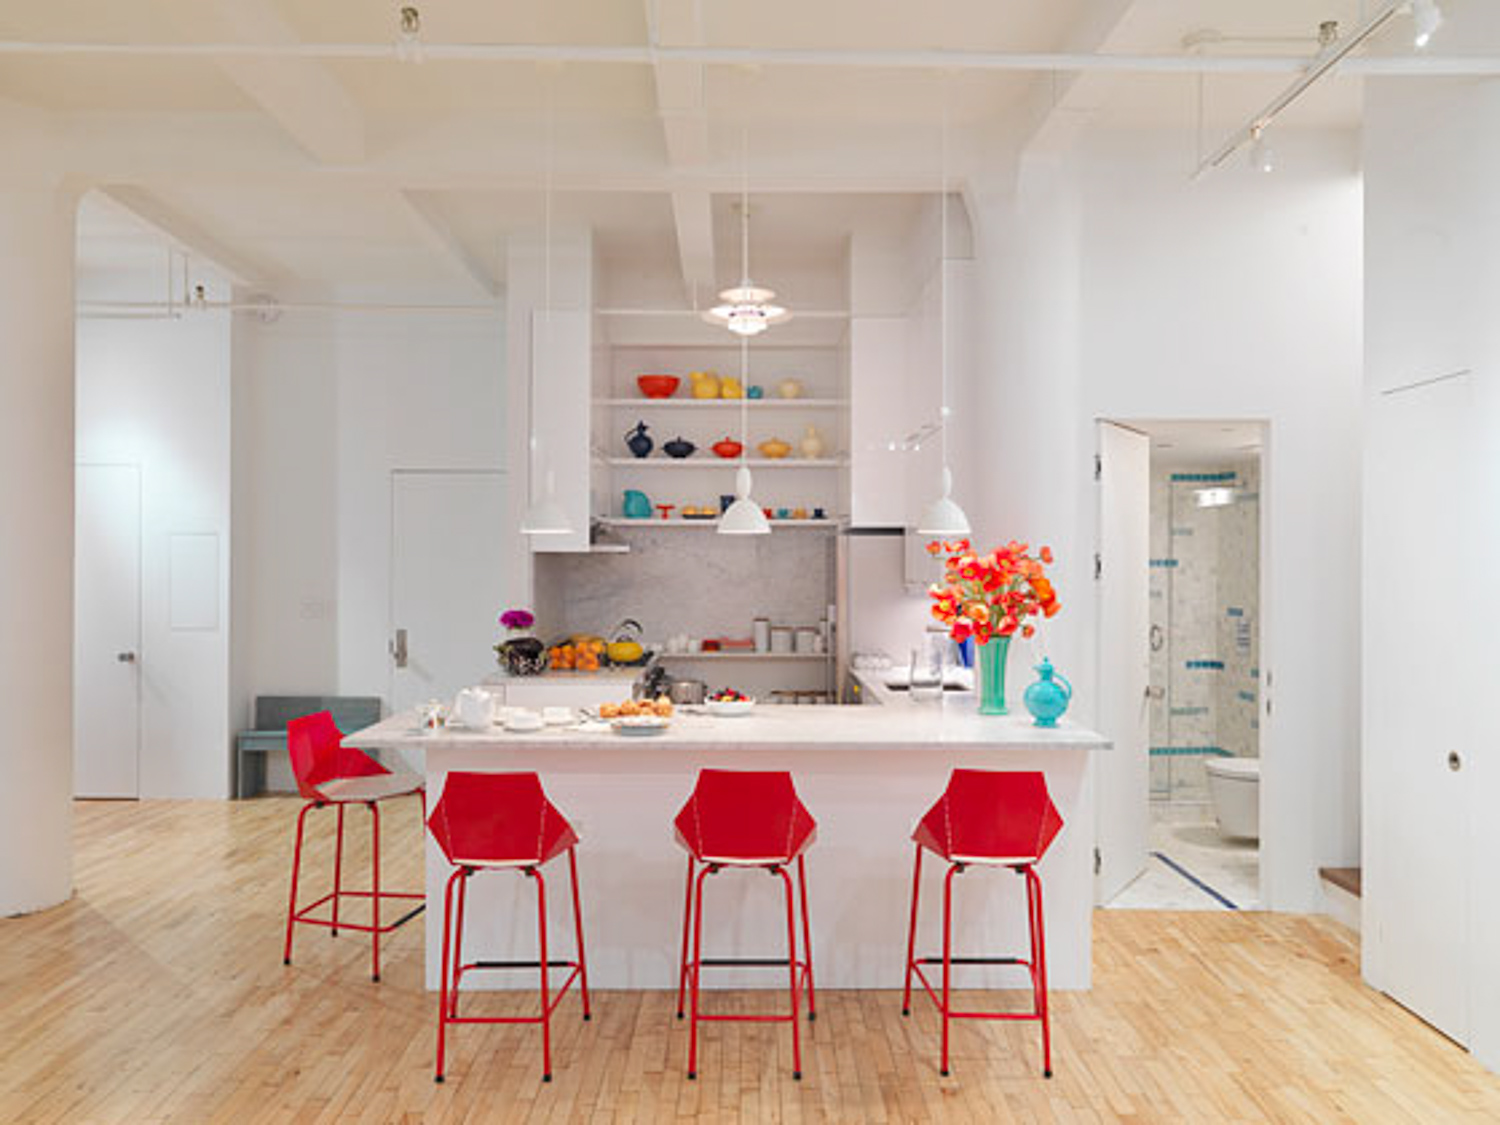 Kitchen _I-Beam Design _Photo by Thomas Loof_NY Magazine.jpg